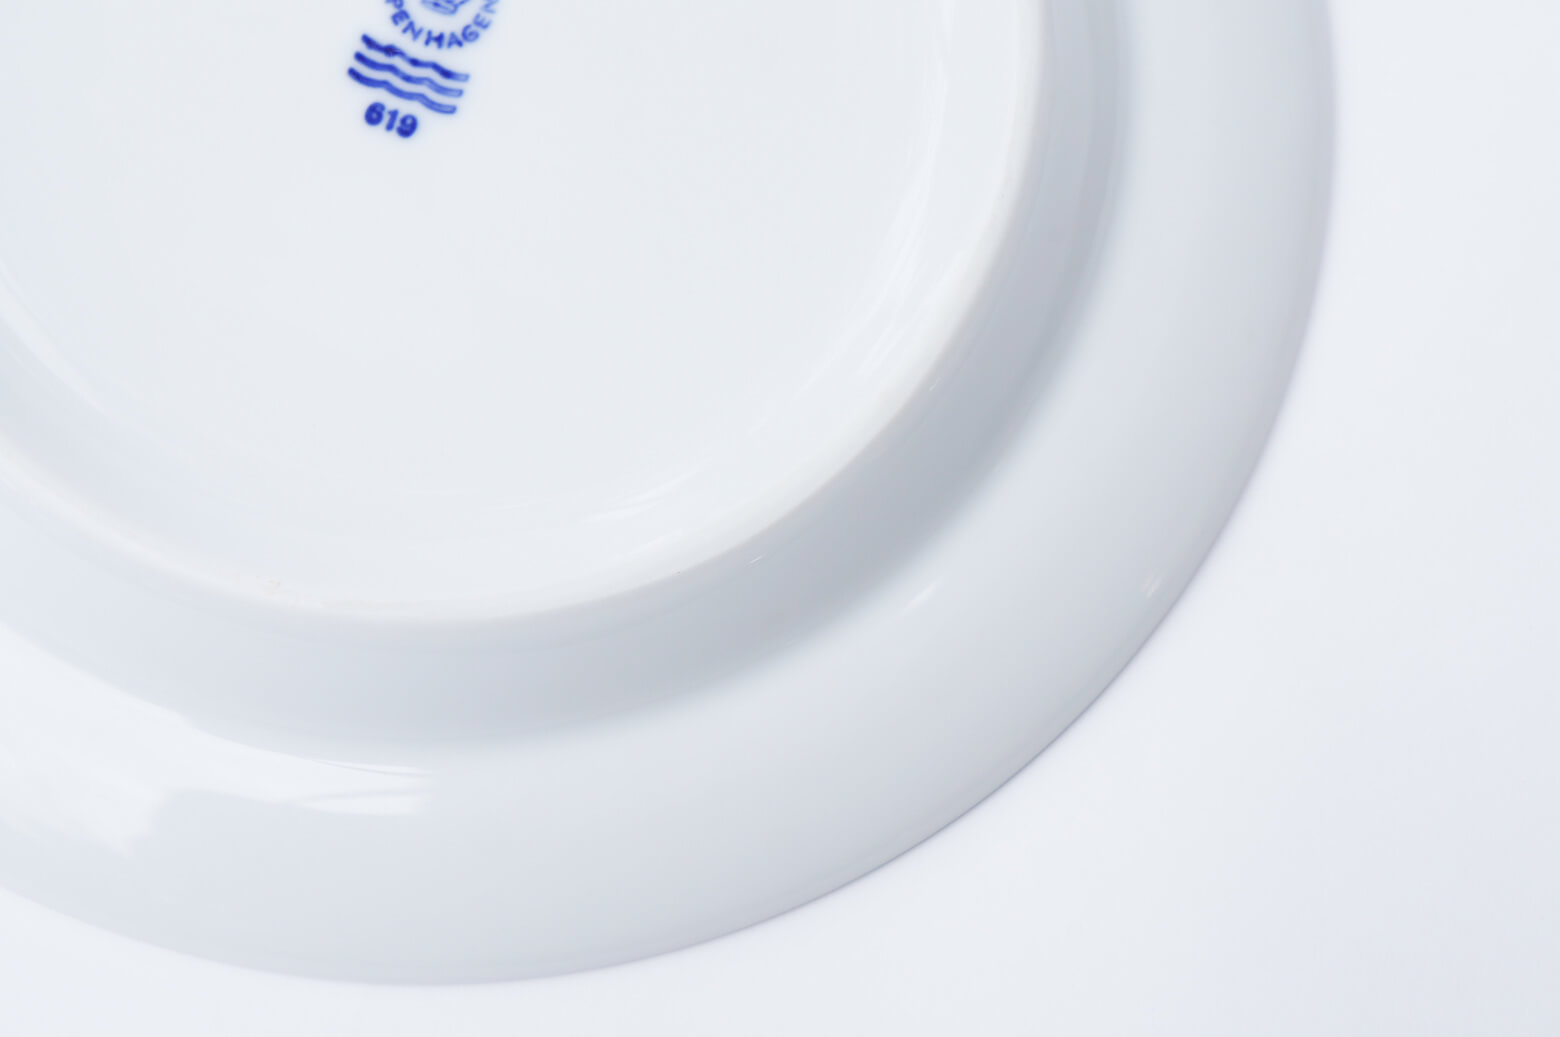 Copenhagen WHITE POT Series/ロイヤル コペンハーゲン ホワイト ポット シリーズ プレート 北欧 食器 4